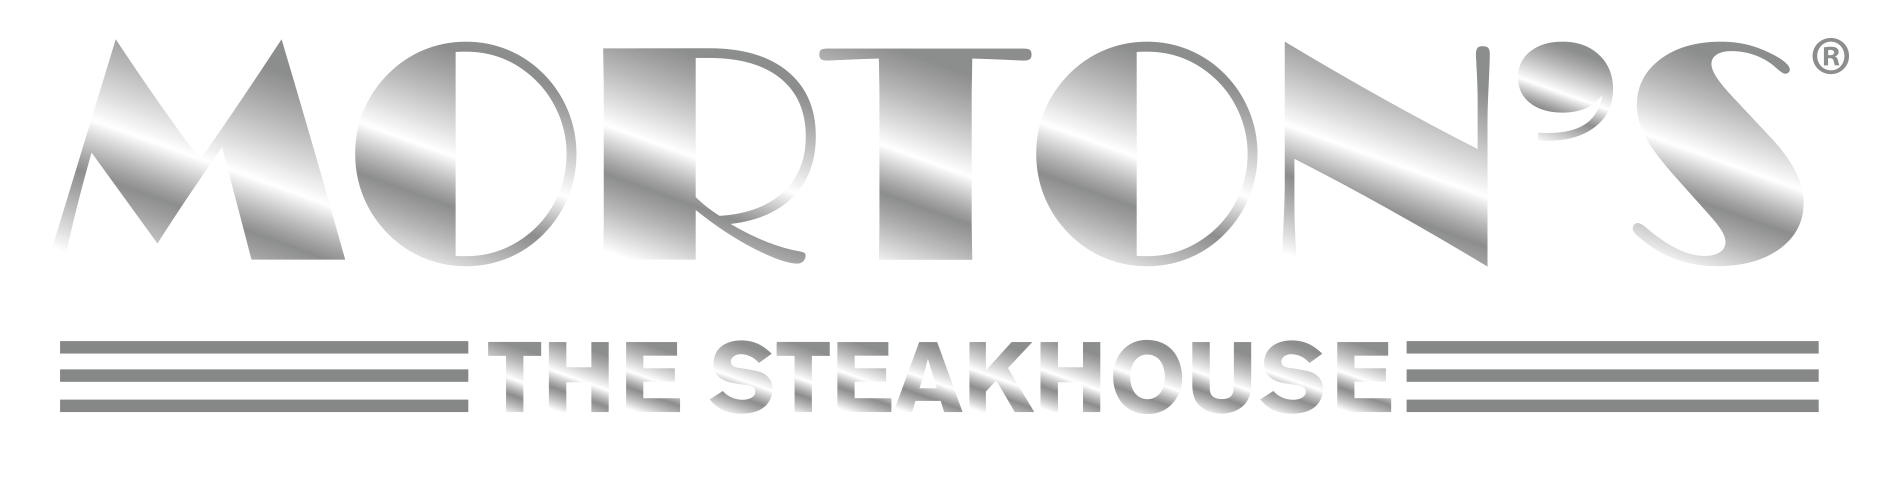 Morton's The Steakhouse - New York